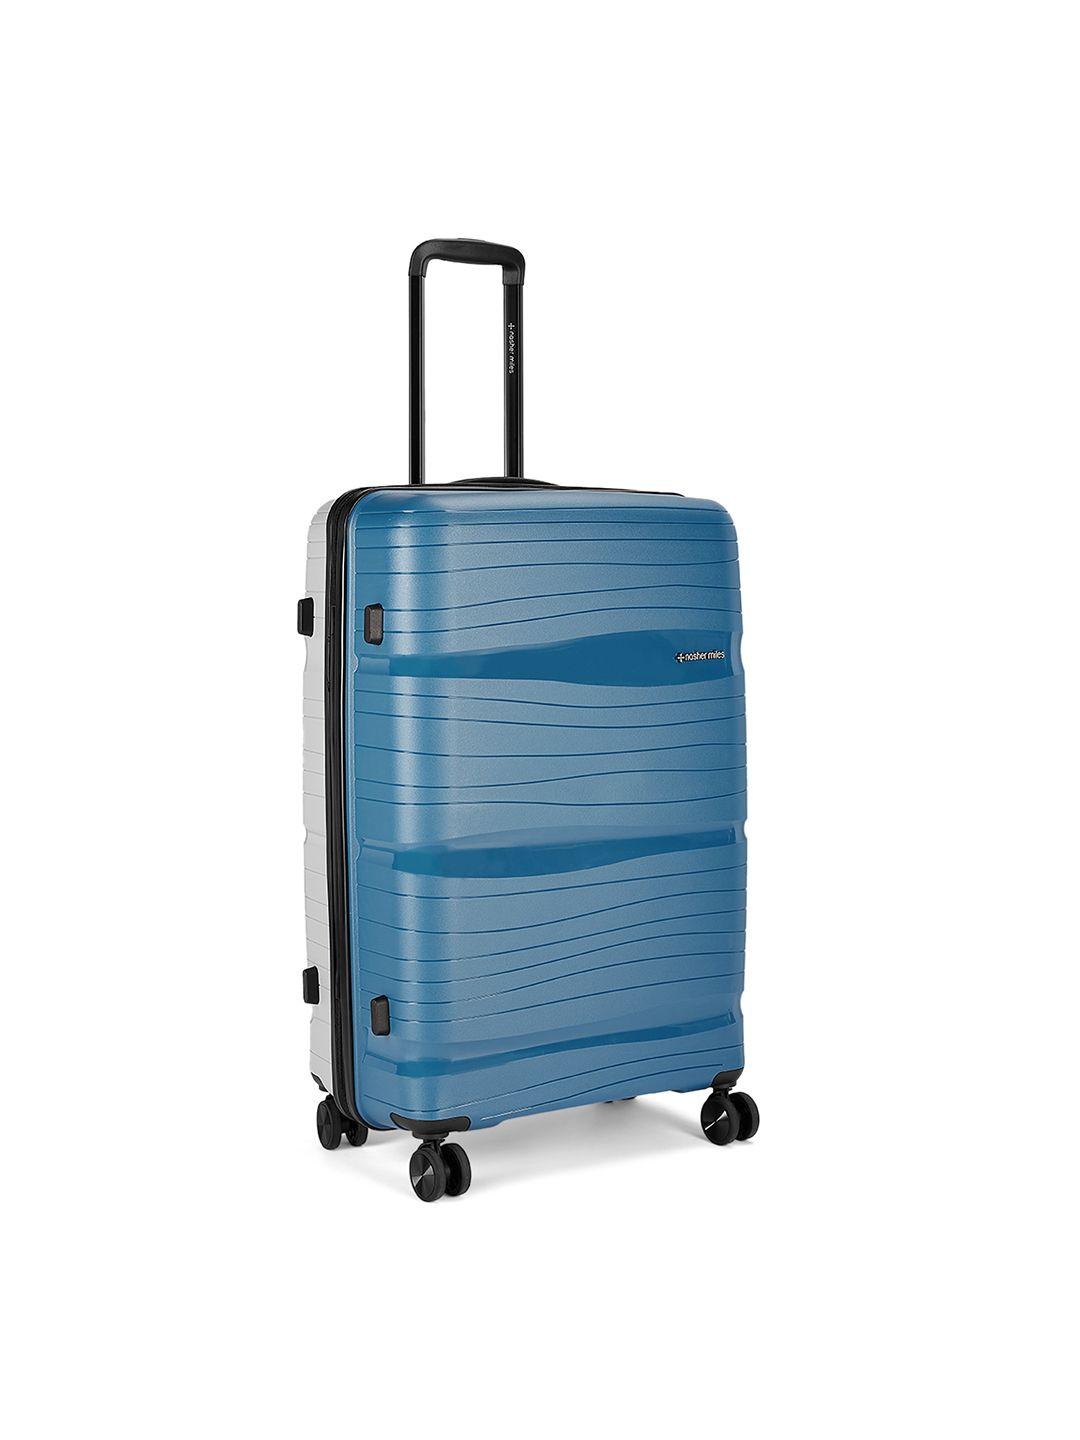 nasher miles colourblocked hard-sided trolley suitcase